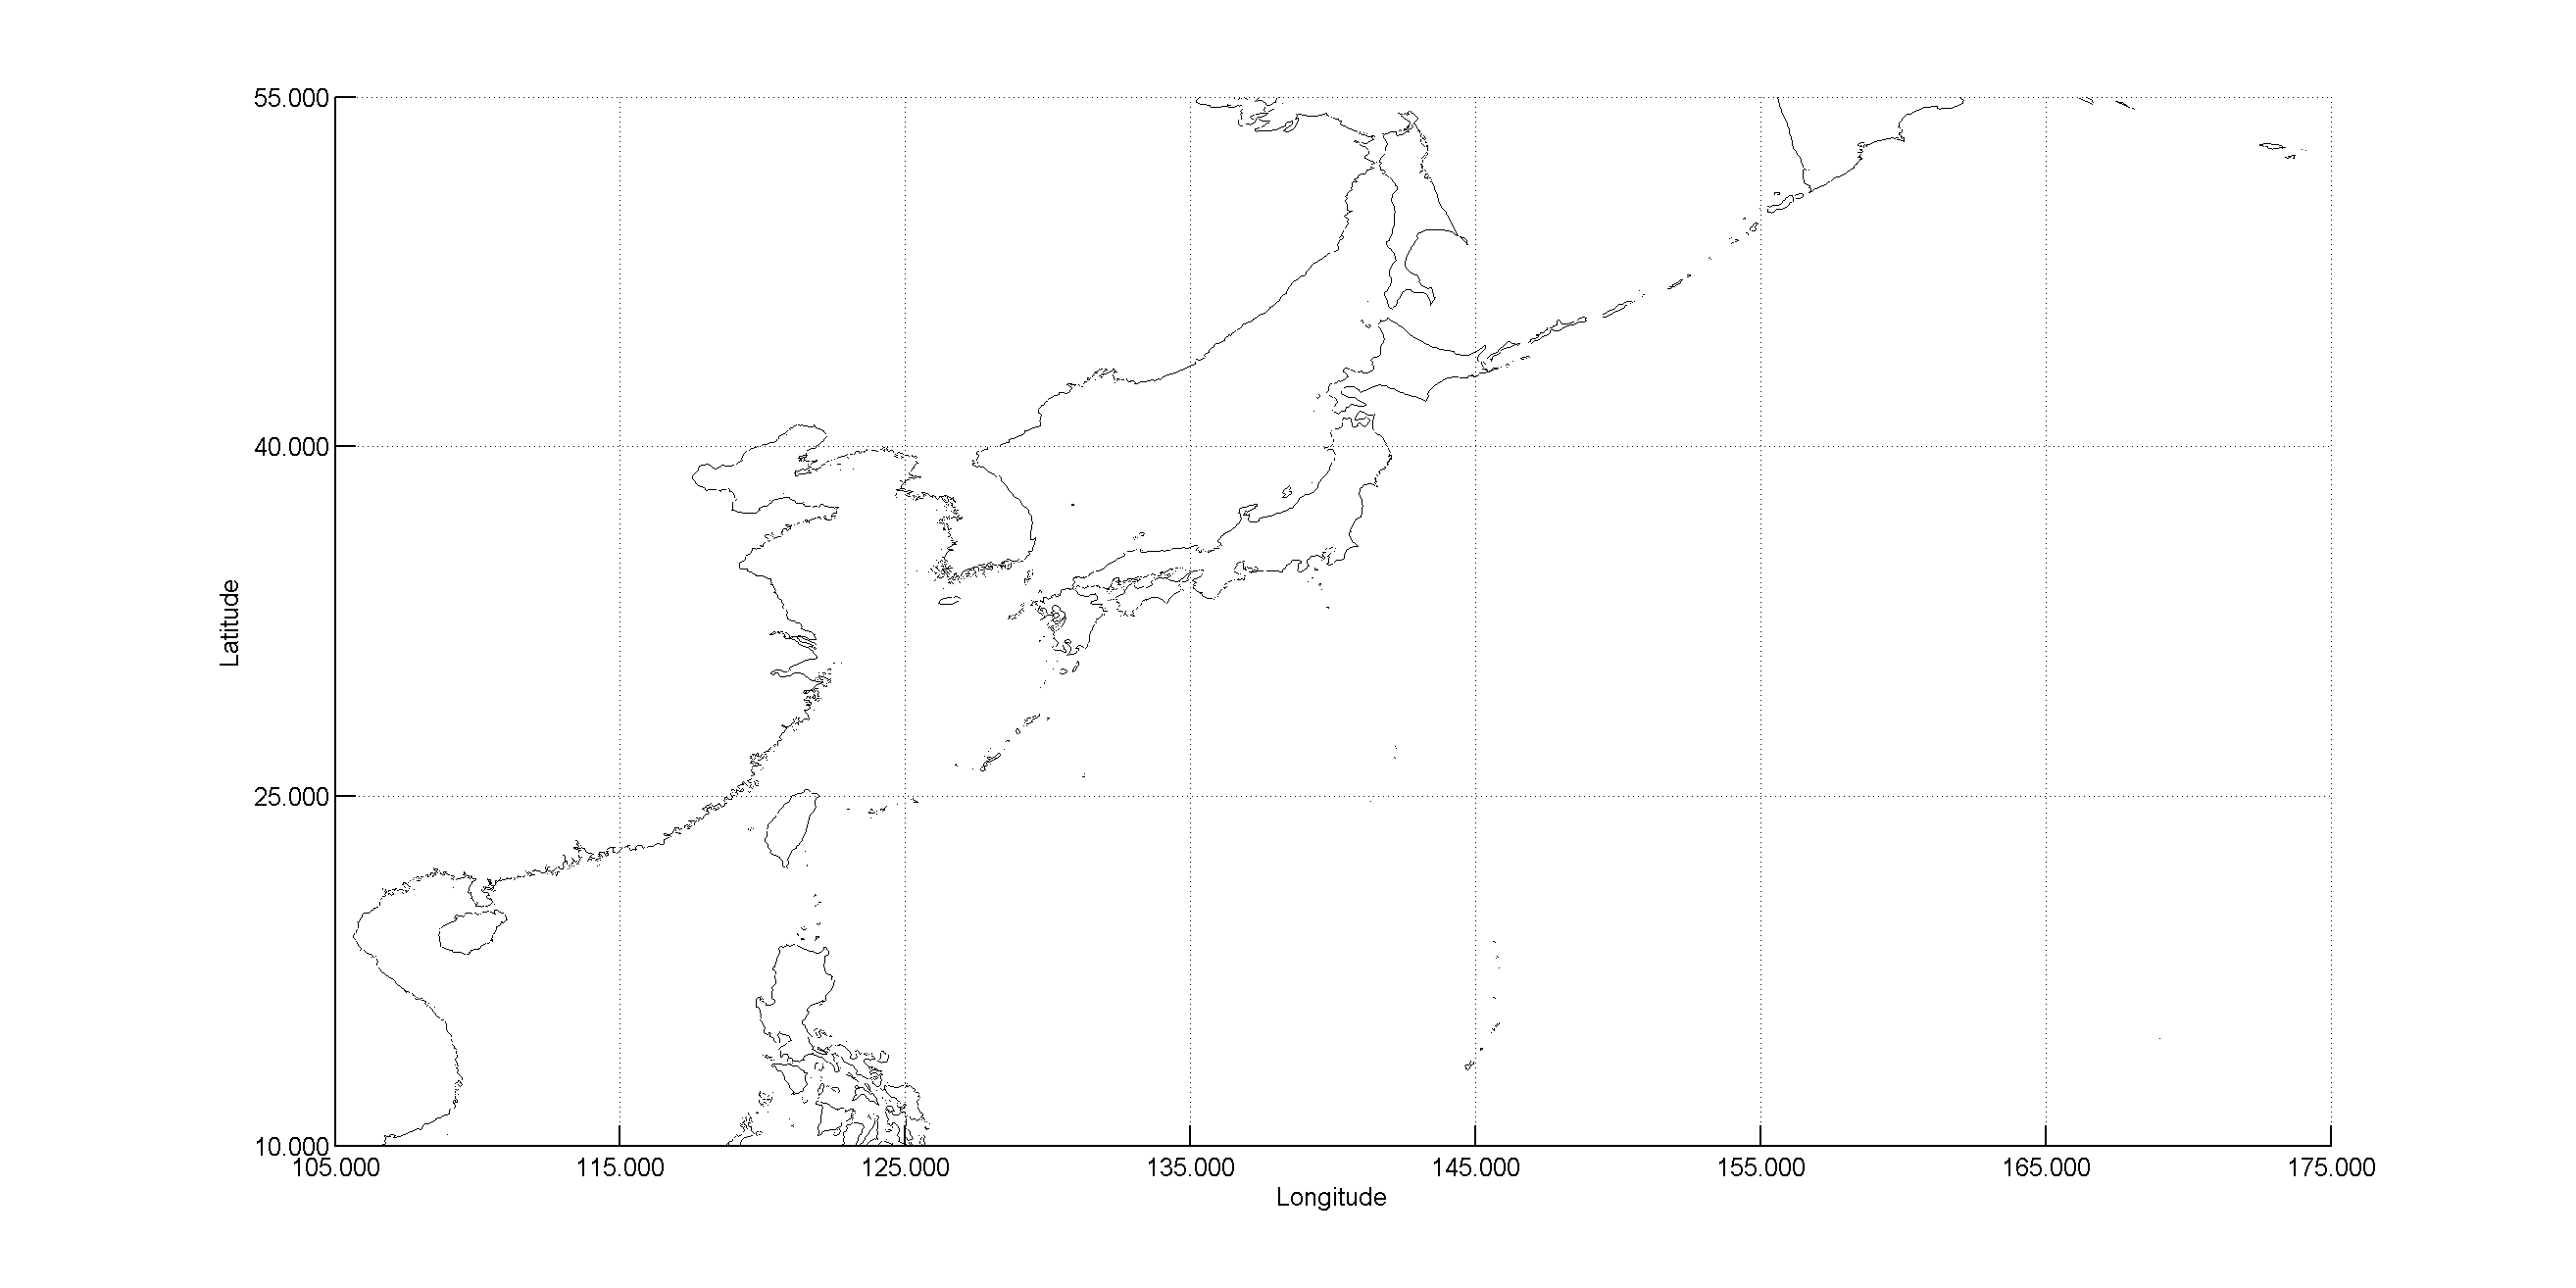 CYCLE_119 - Japan Descending passes